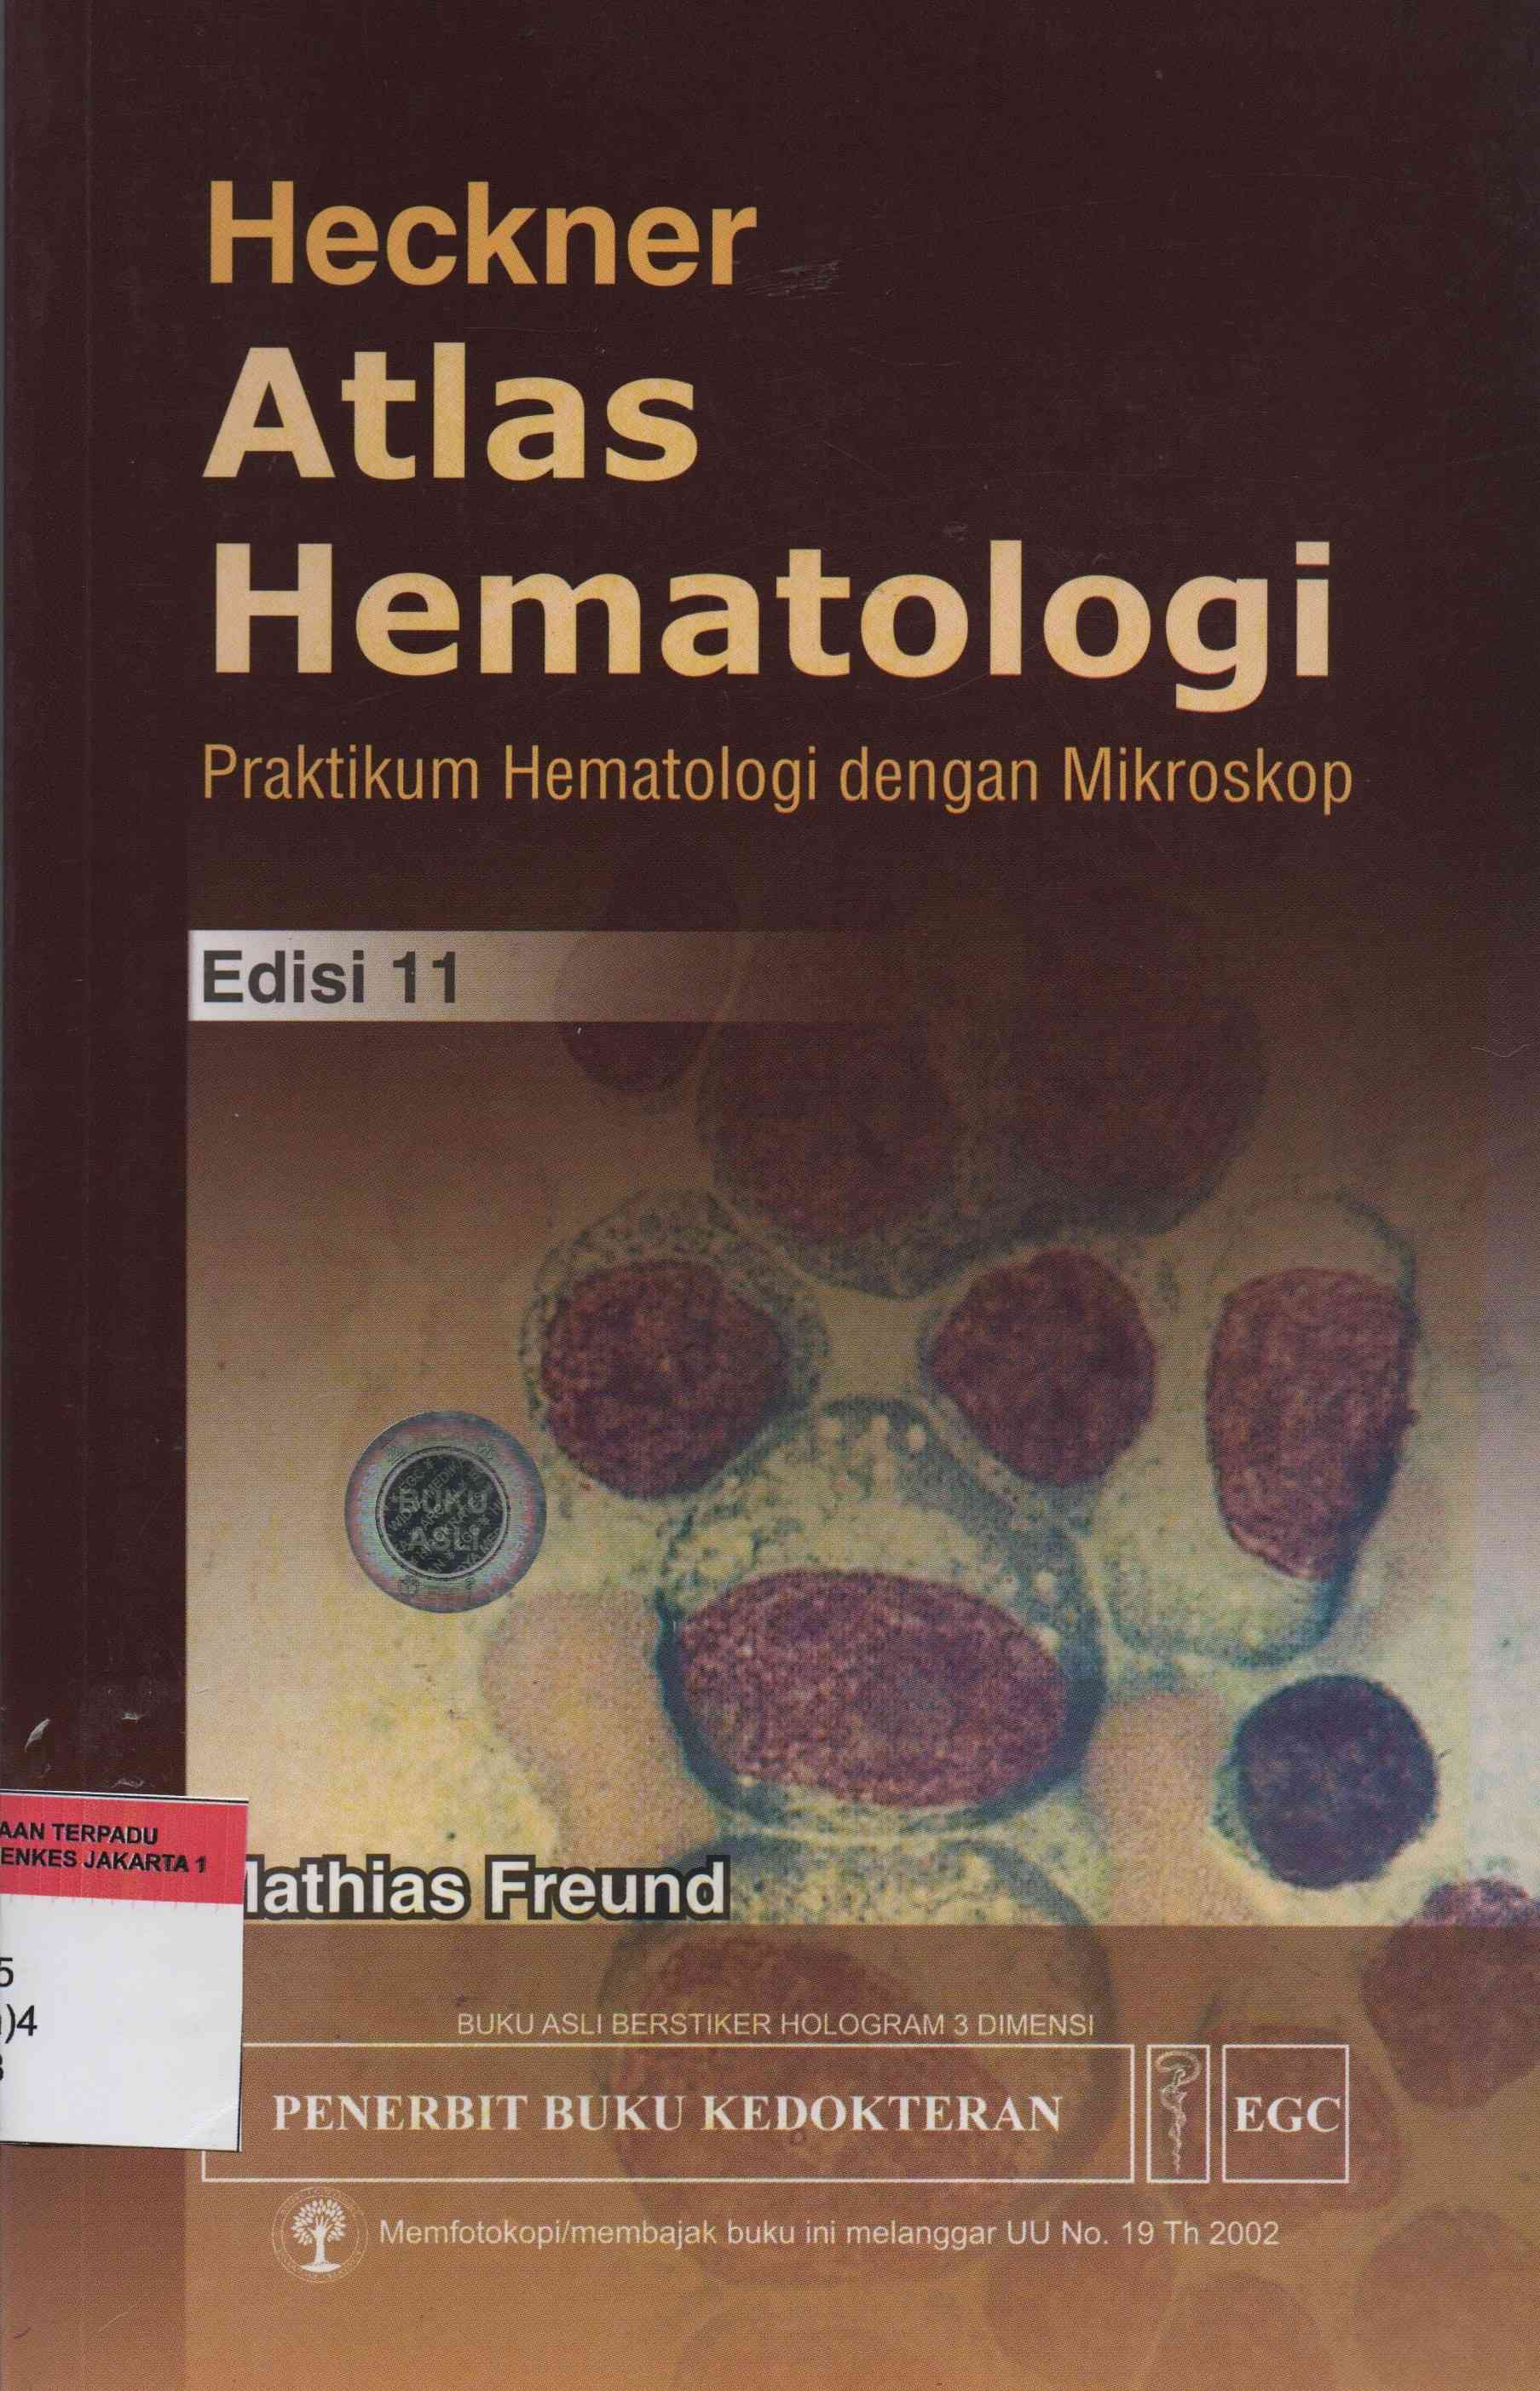 Atlas Hematologi Heckner: Praktikum Hematologi dengan Mikroskop (Edisi 11)